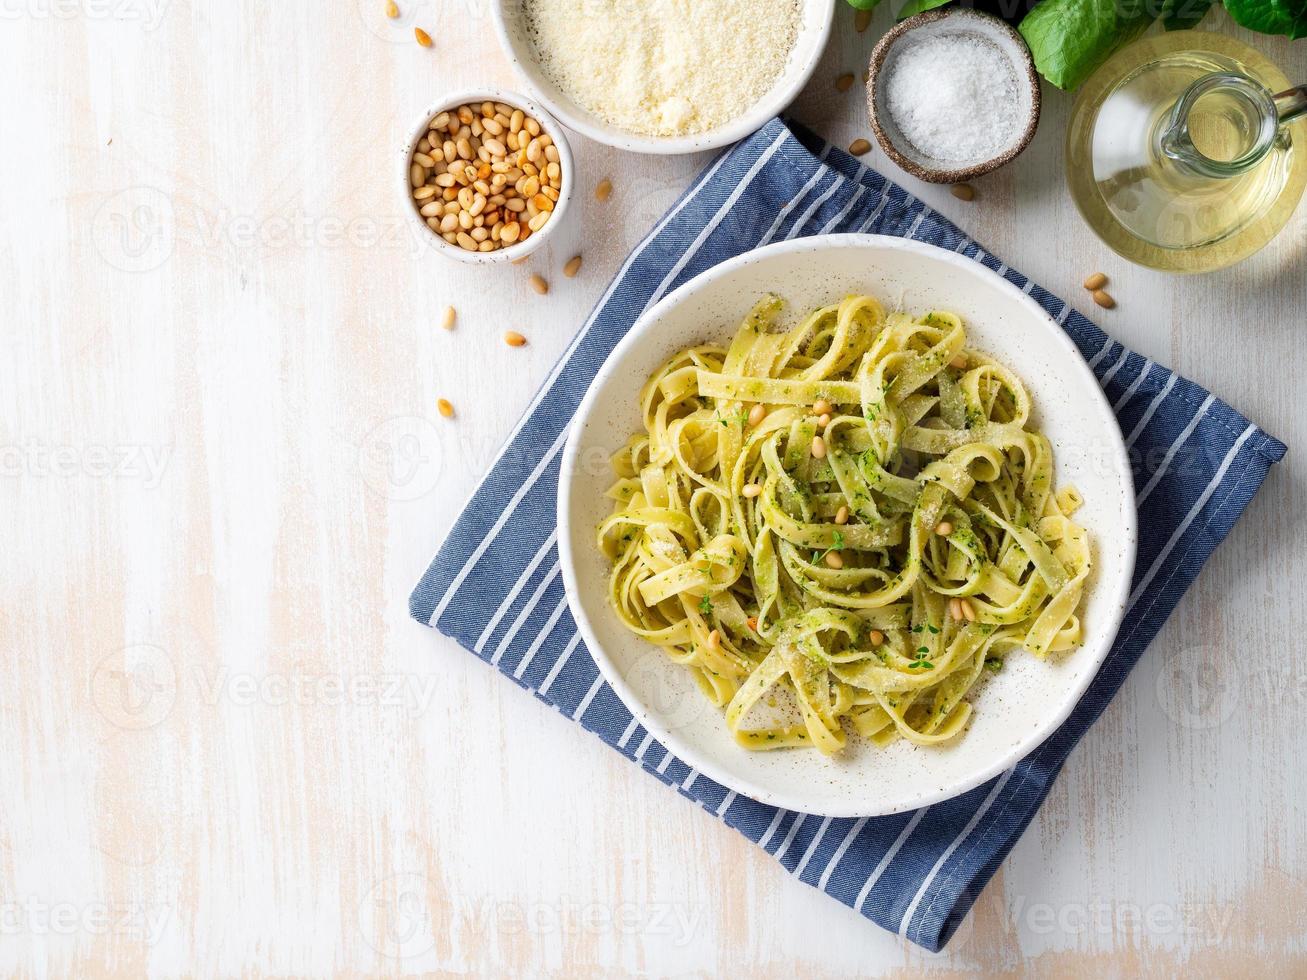 Tagliatelle pasta with pesto sauce made of Basil, garlic, pine nuts, olive oil photo